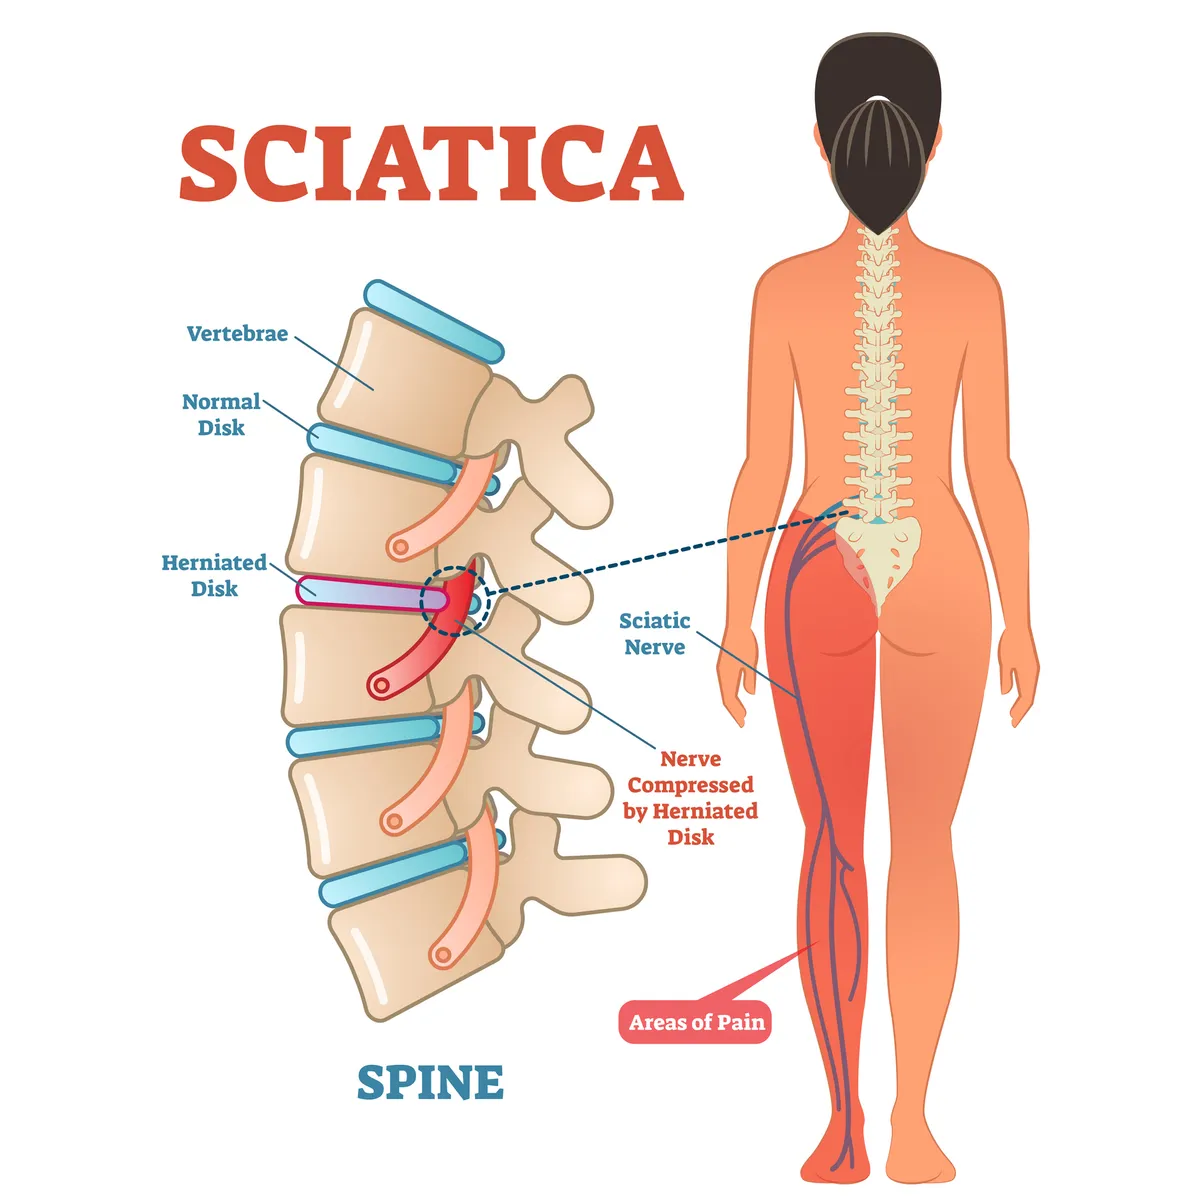 The sciatica nerve